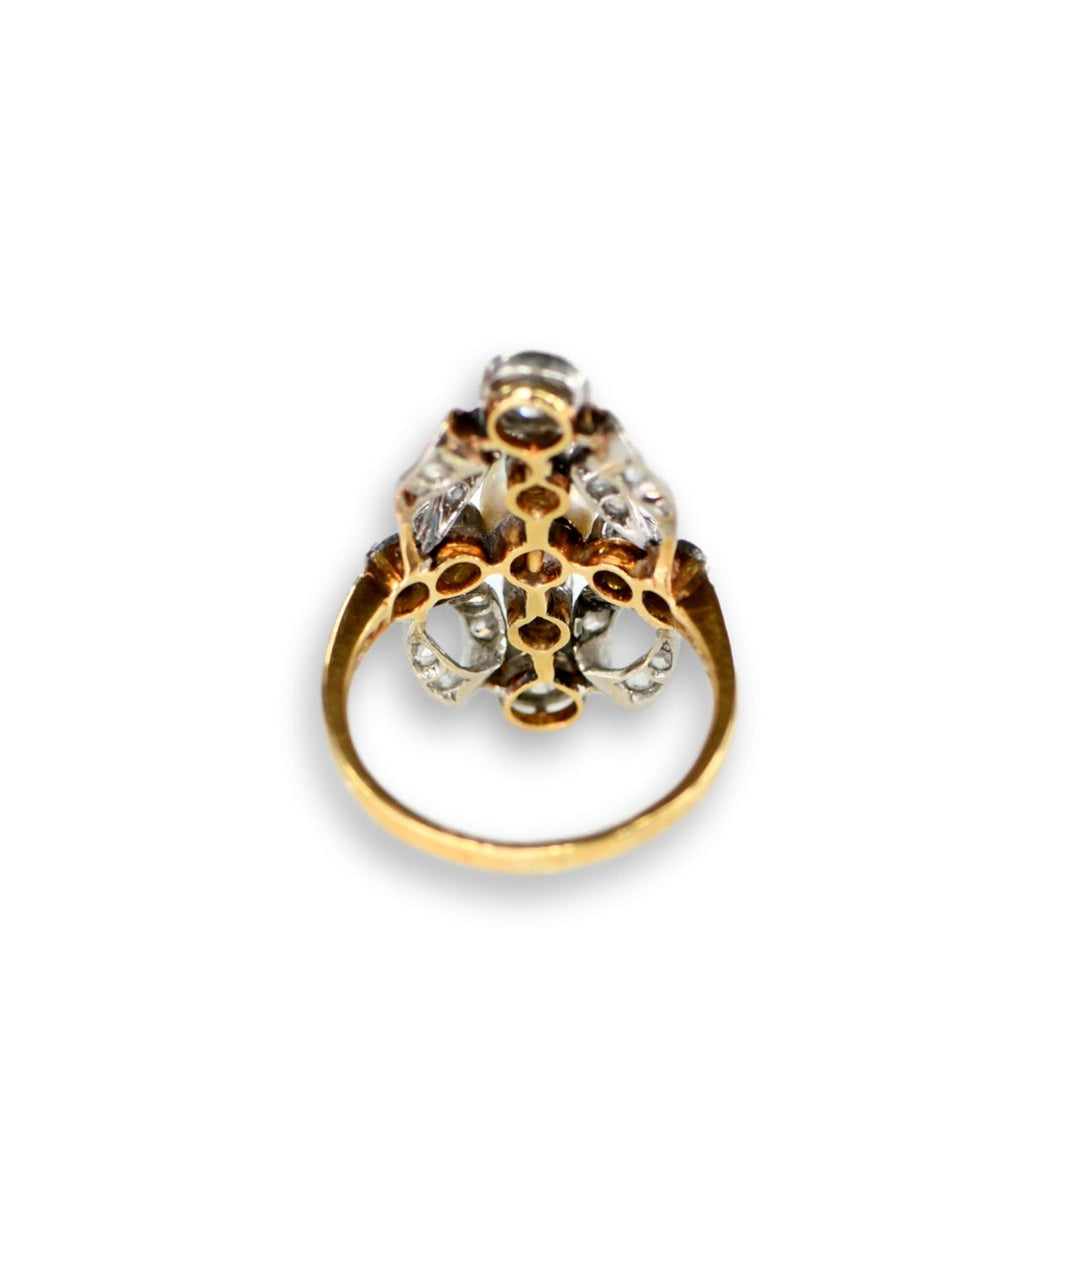 Edwardian Pearl Diamond Gold Ring Circa 1910 - SOLD